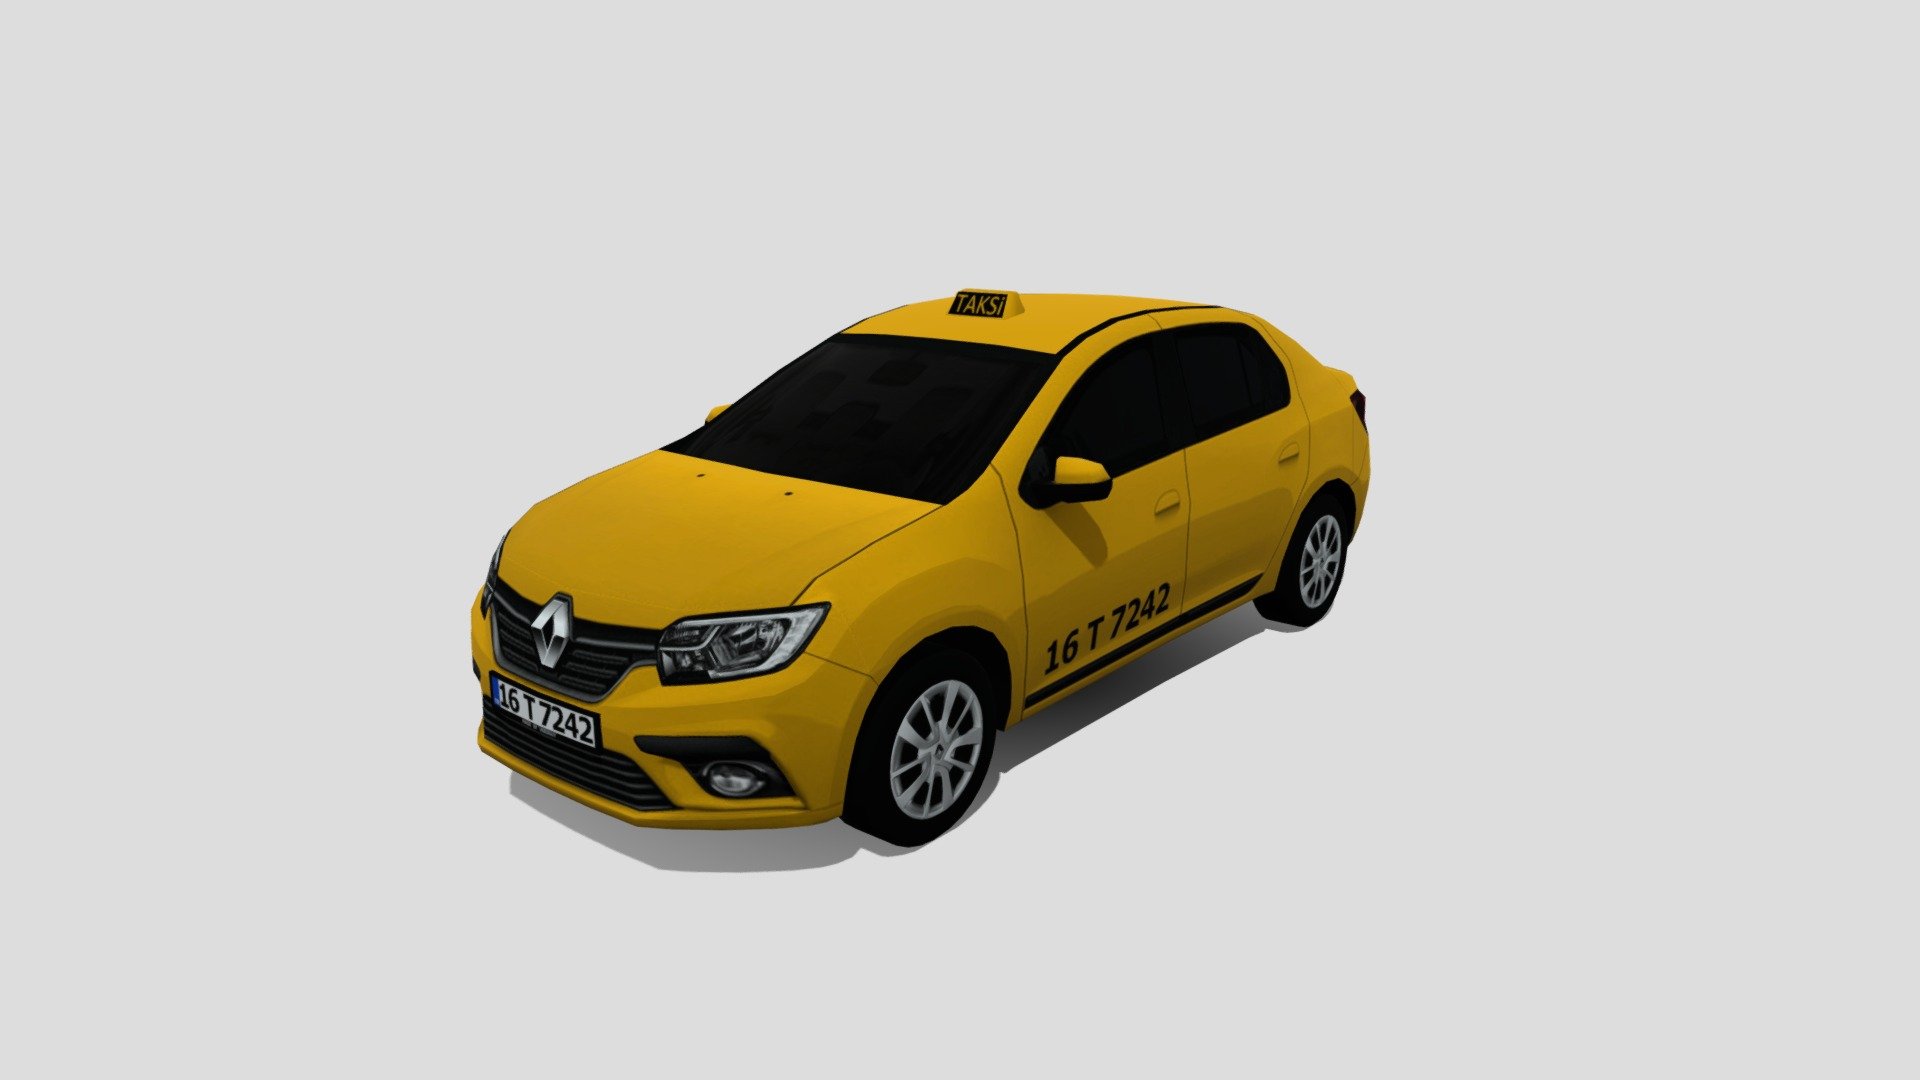 2017 Renault Symbol Taxi by VeesGuy

Tris: 3374
Textures: 1024x1024 - 2017 Renault Symbol Taxi - 3D model by VeesGuy 3d model